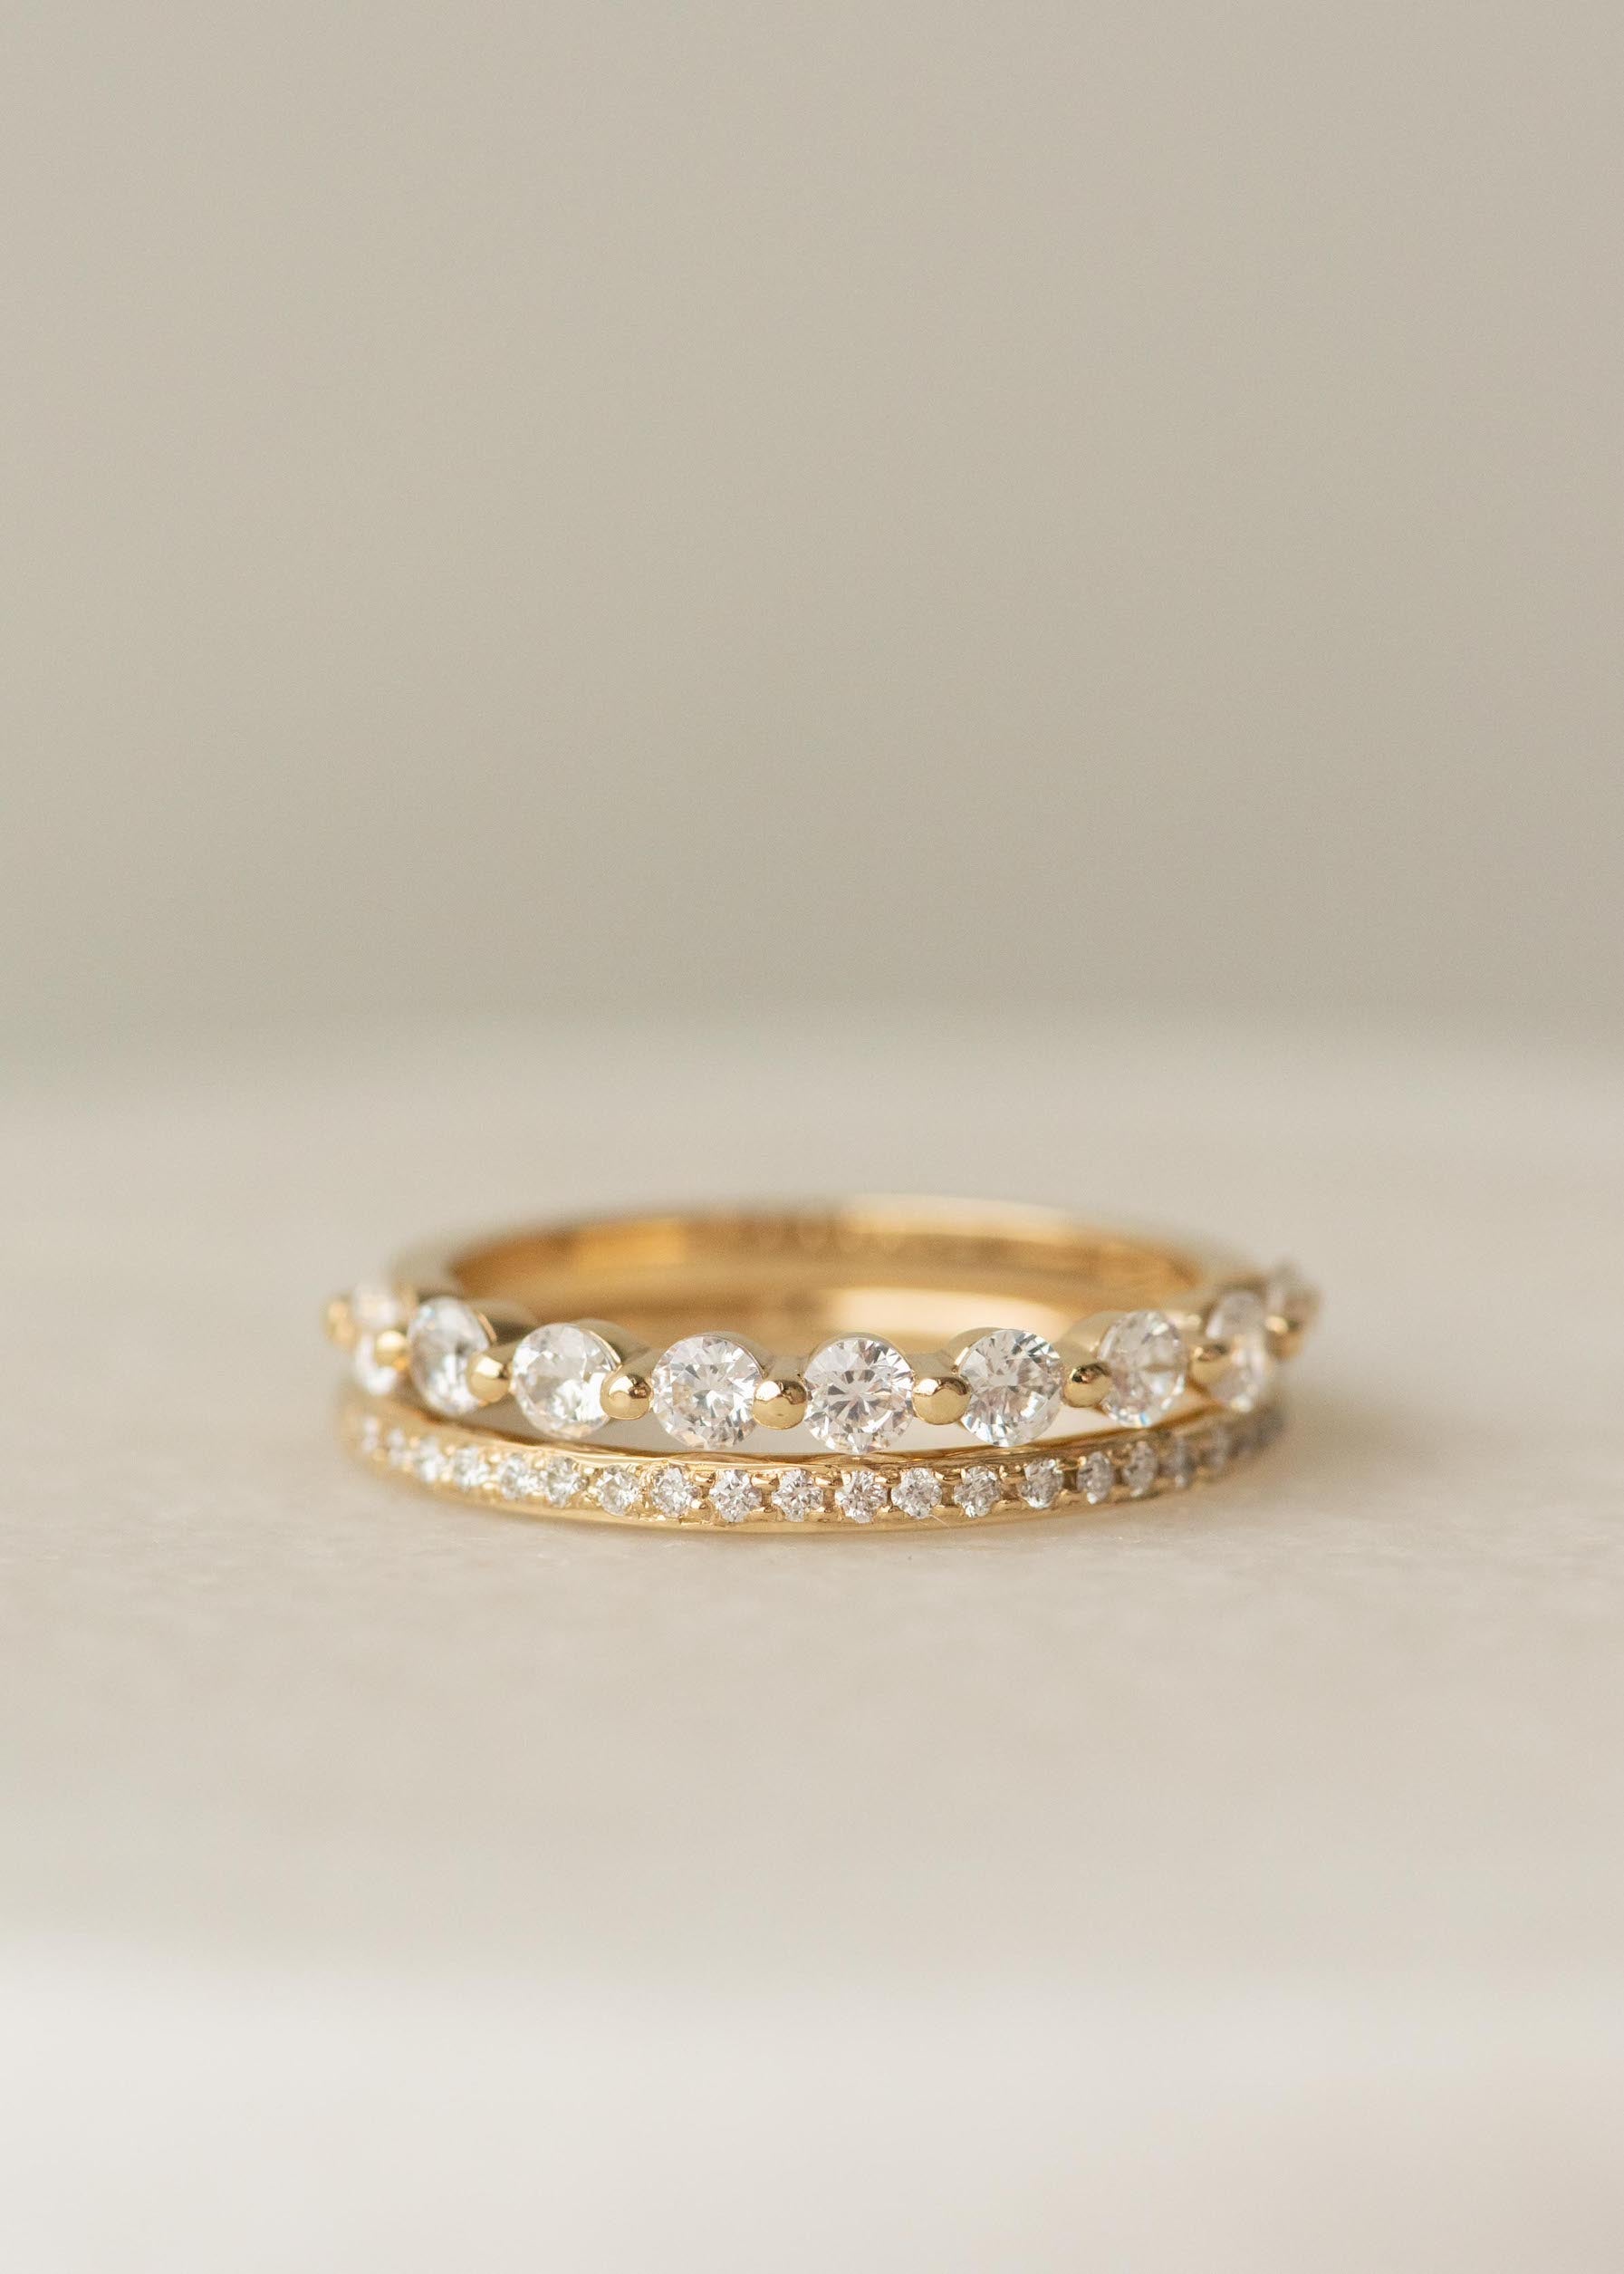 Chenier Diamond Band - 21 Diamond Ring - Dean & Dust Jewellery Store - Whangarei - Northland - Jewellery Design - Bespoke Design